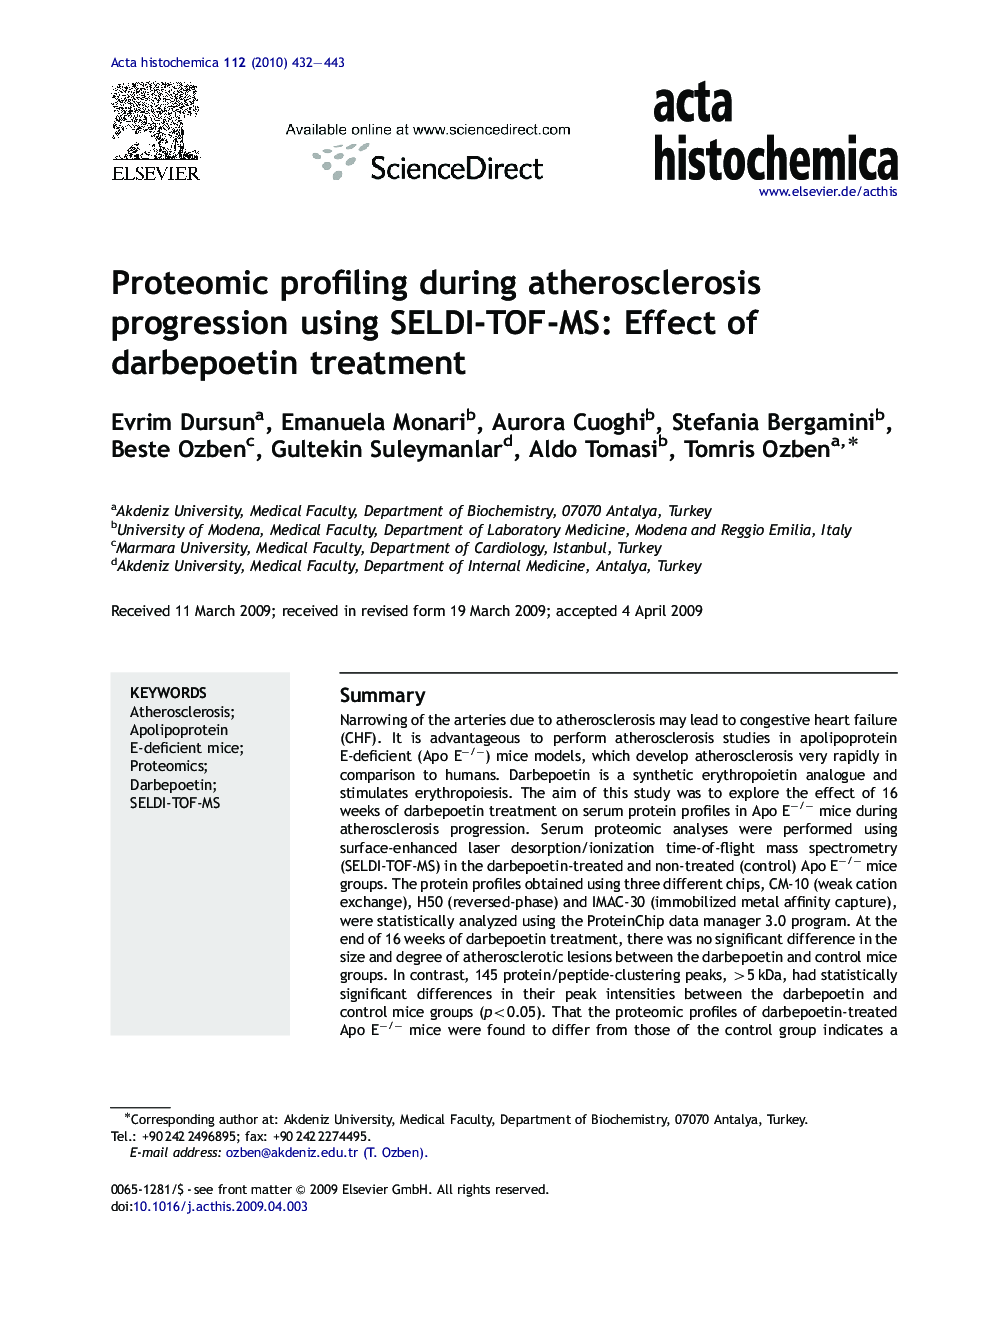 Proteomic profiling during atherosclerosis progression using SELDI-TOF-MS: Effect of darbepoetin treatment